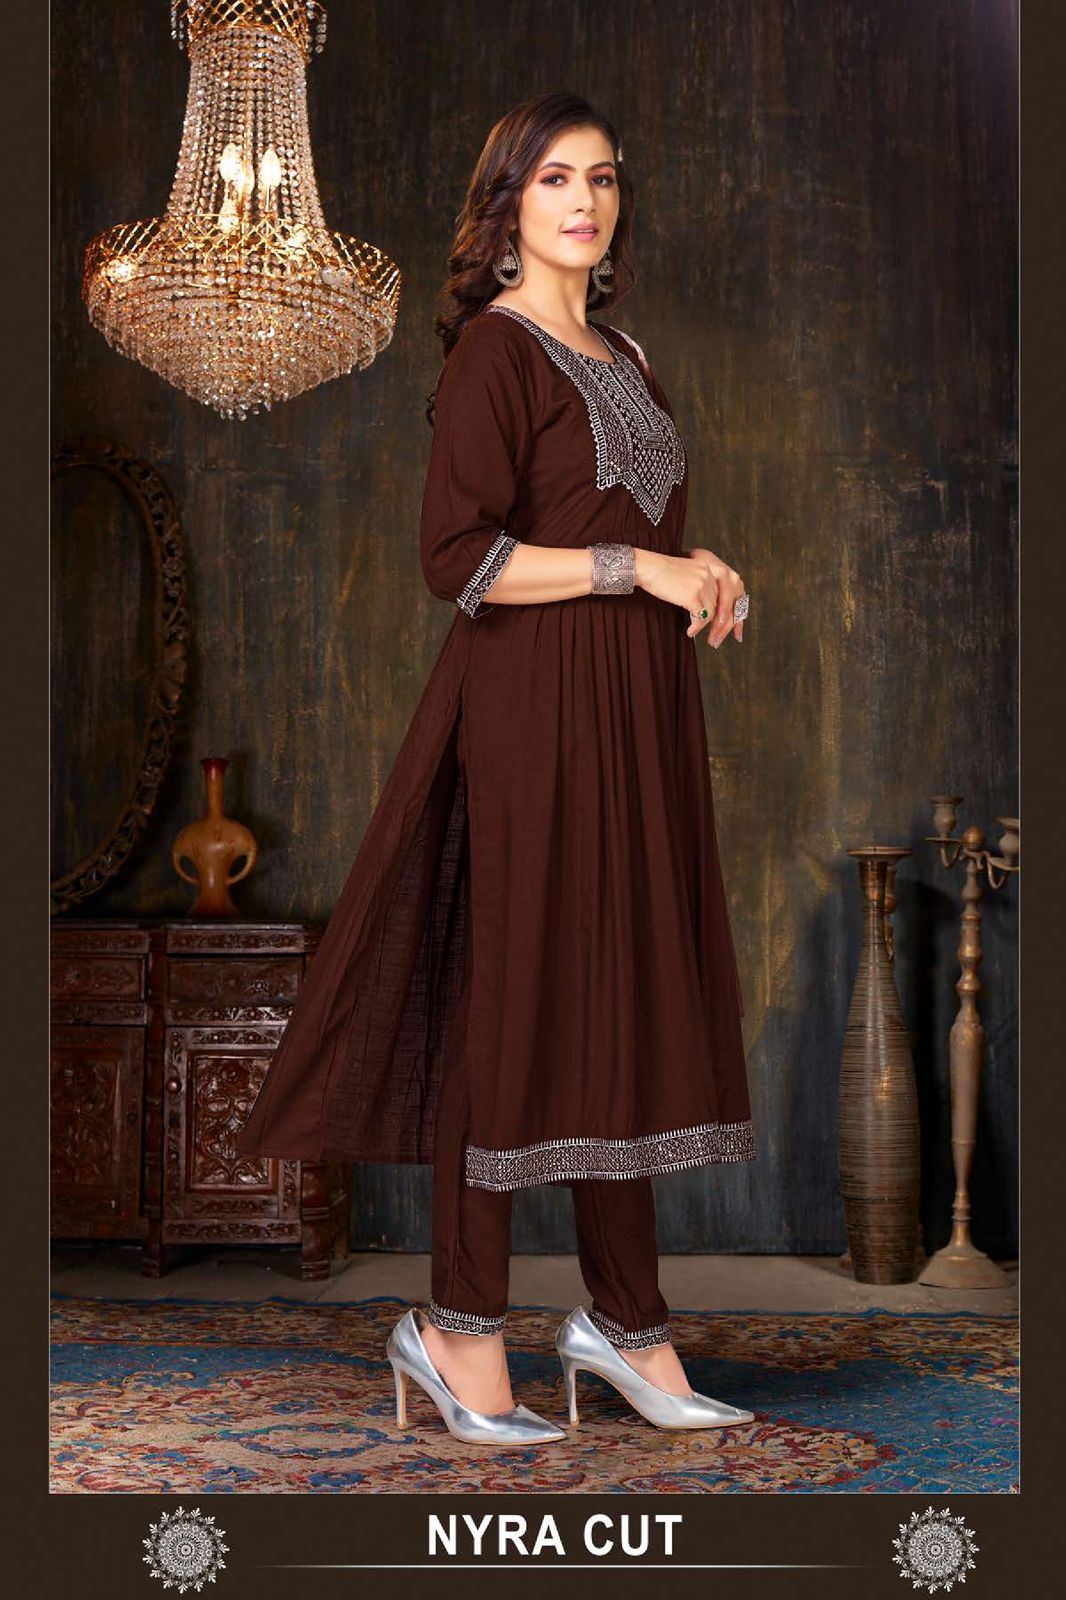 Which colour leggings suit a dark maroon kurtis? - Quora